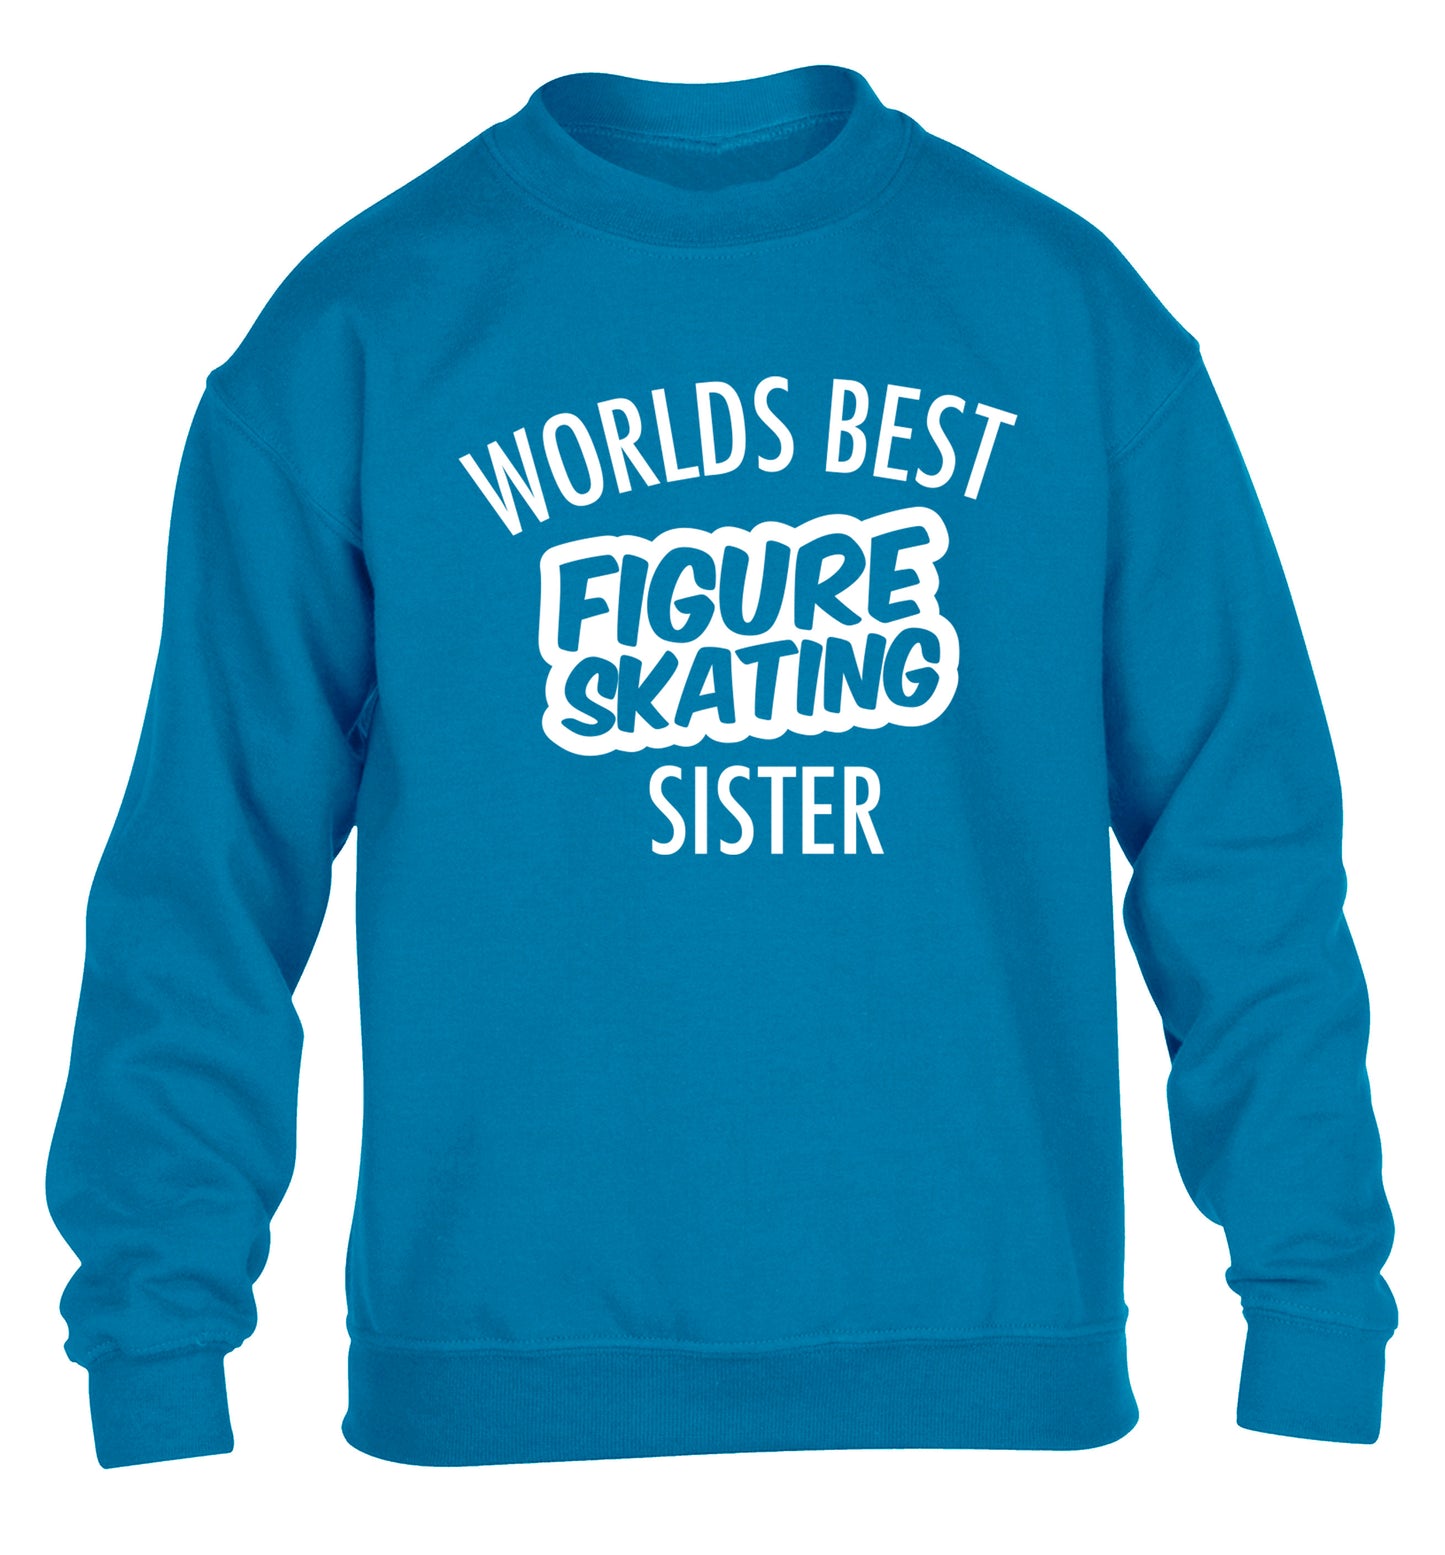 Worlds best figure skating sisterchildren's blue sweater 12-14 Years